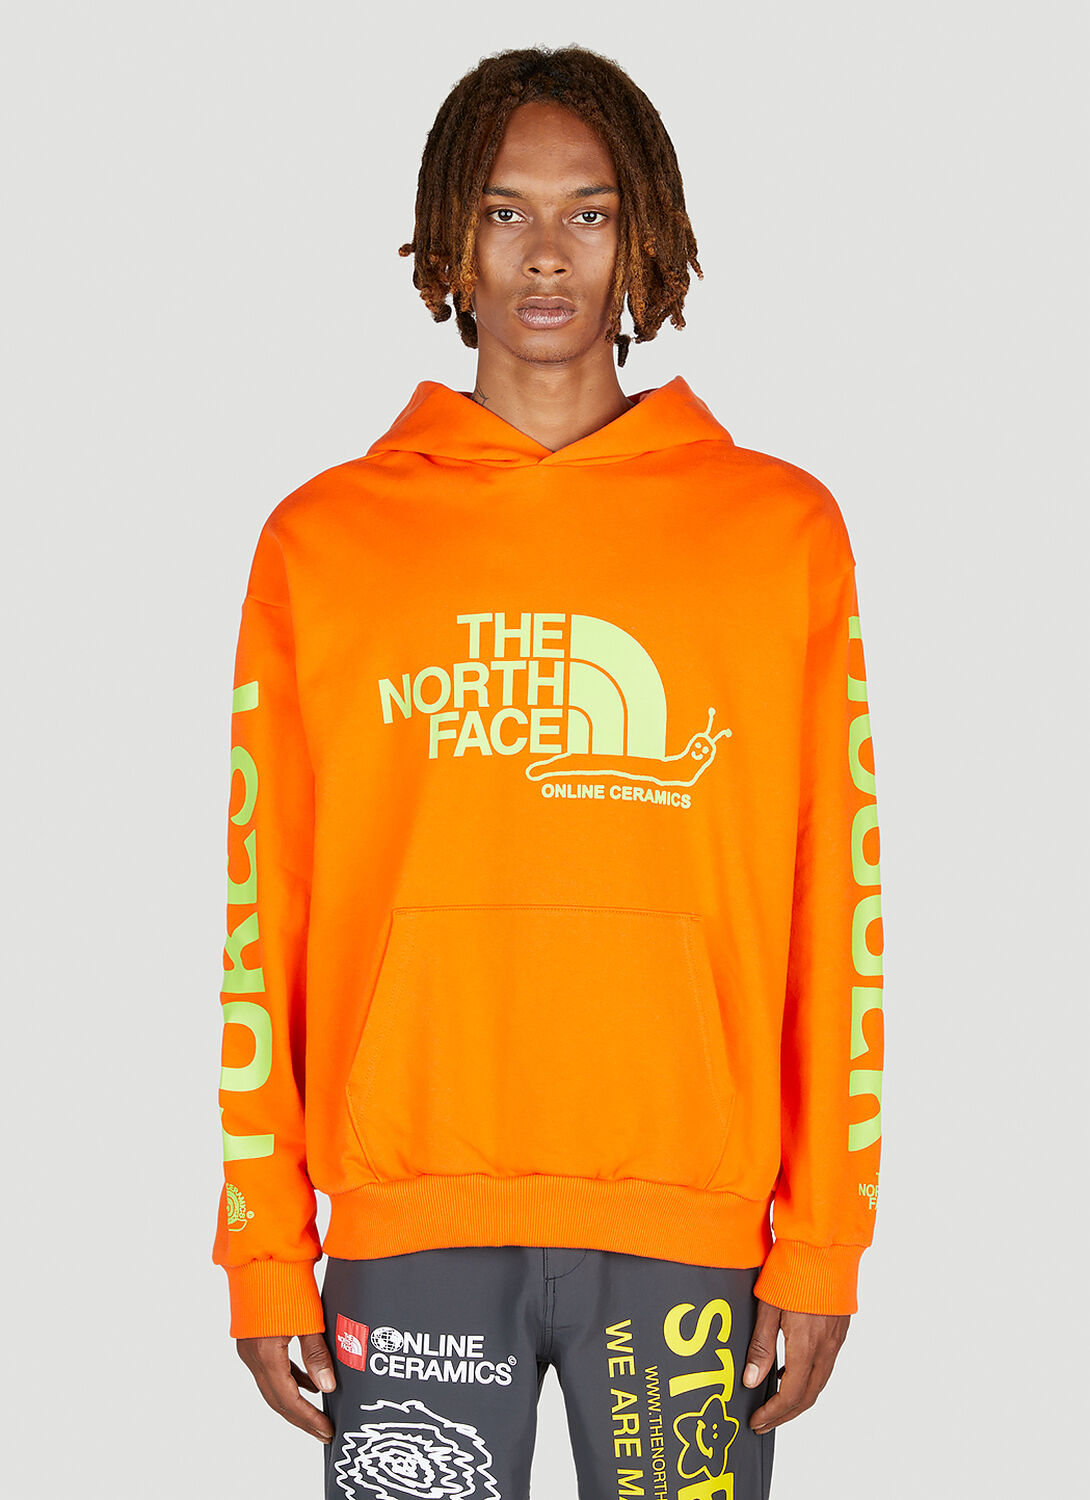 The North Face X Online Ceramics Hooded Sweatshirt In Orange